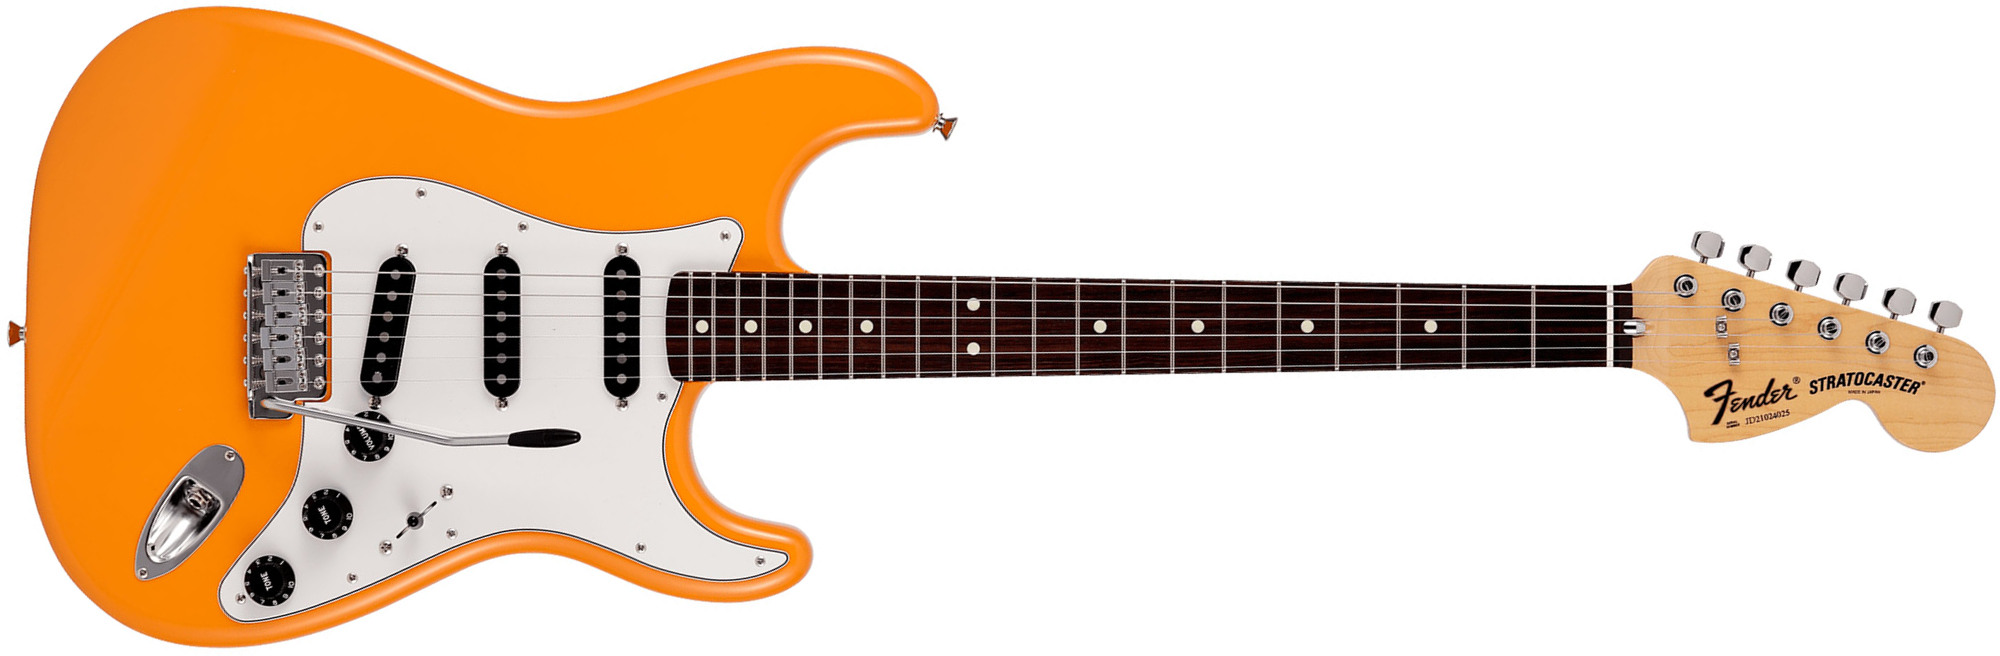 Fender Strat International Color Ltd Jap 3s Trem Rw - Capri Orange - Elektrische gitaar in Str-vorm - Main picture